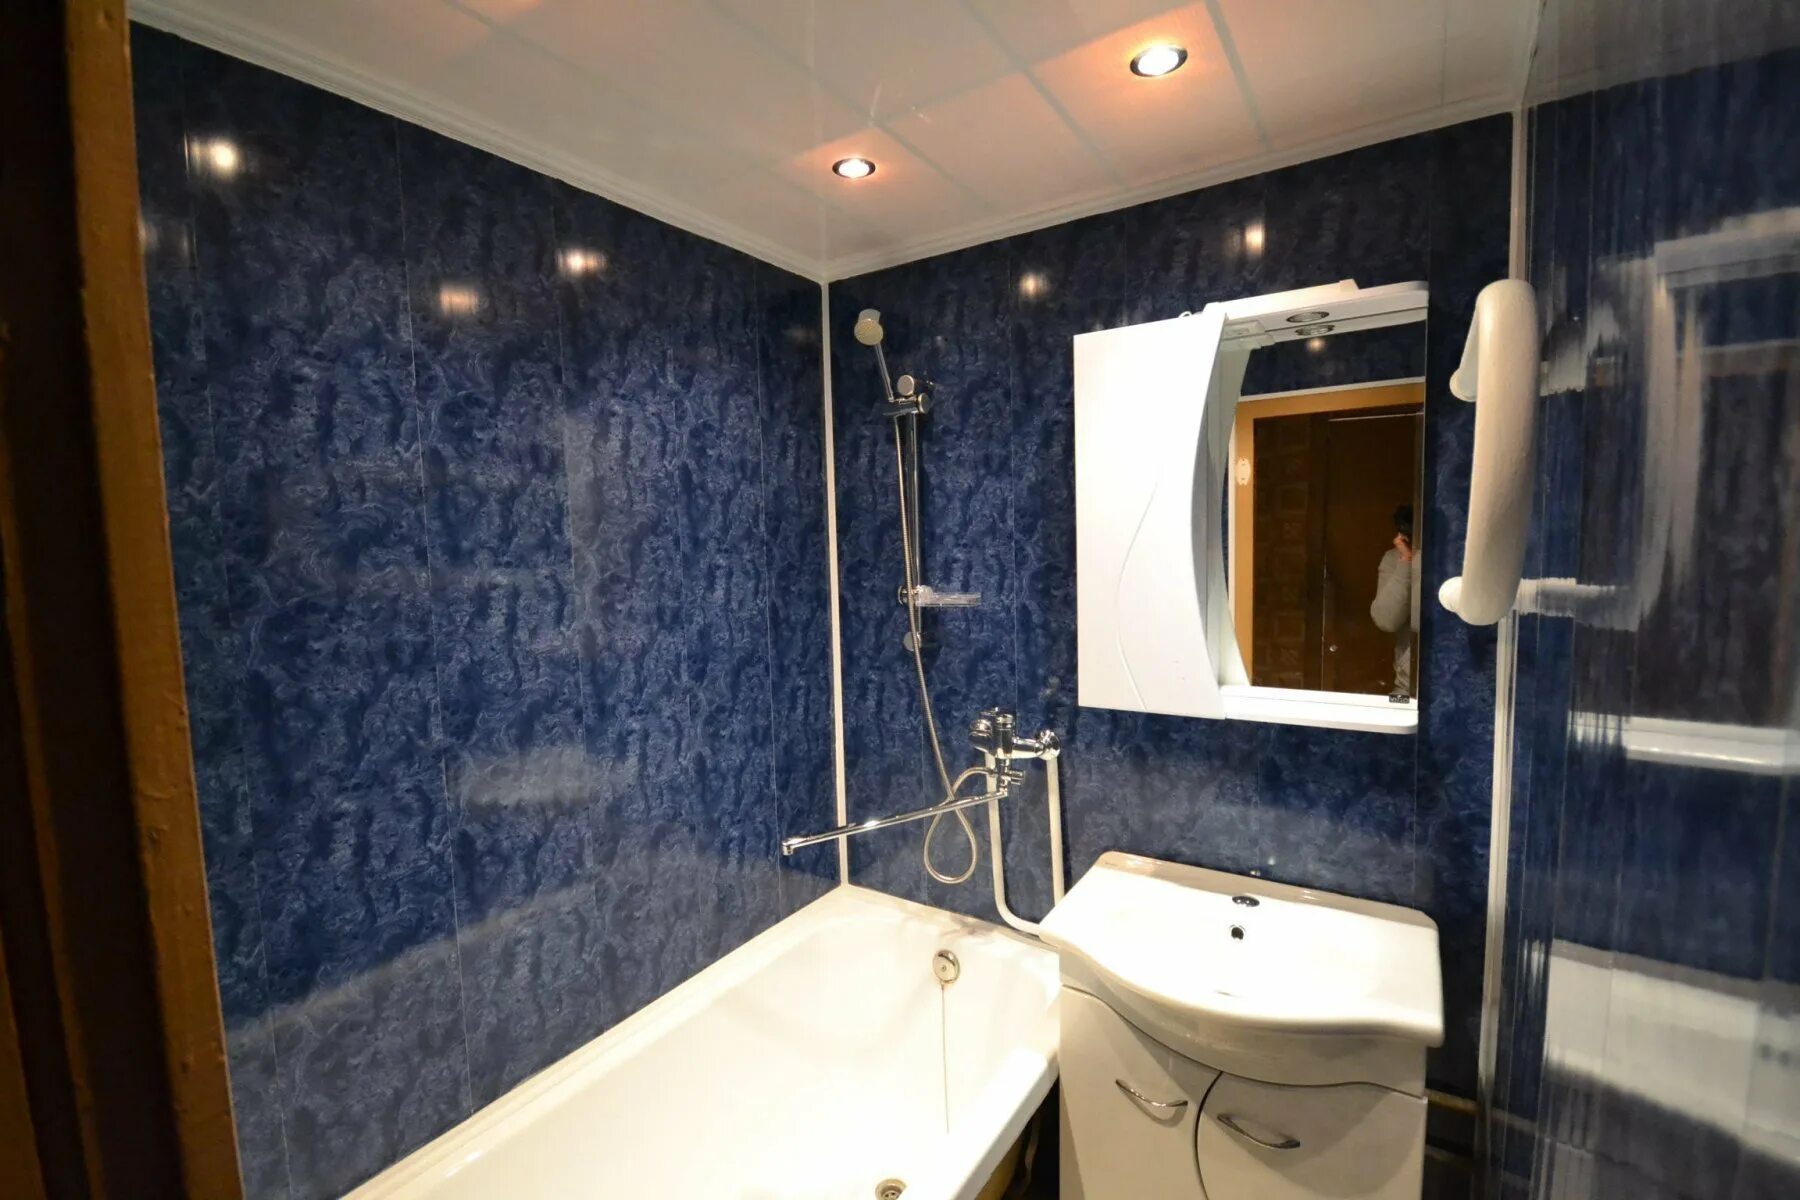 Панельная ванная комната. Отделка ванной комнаты панелями ПВХ. Ванная комната отделанная панелями. Ванная комната из пластиковых панелей. Ванная комната отделанная пластиковыми панелями.